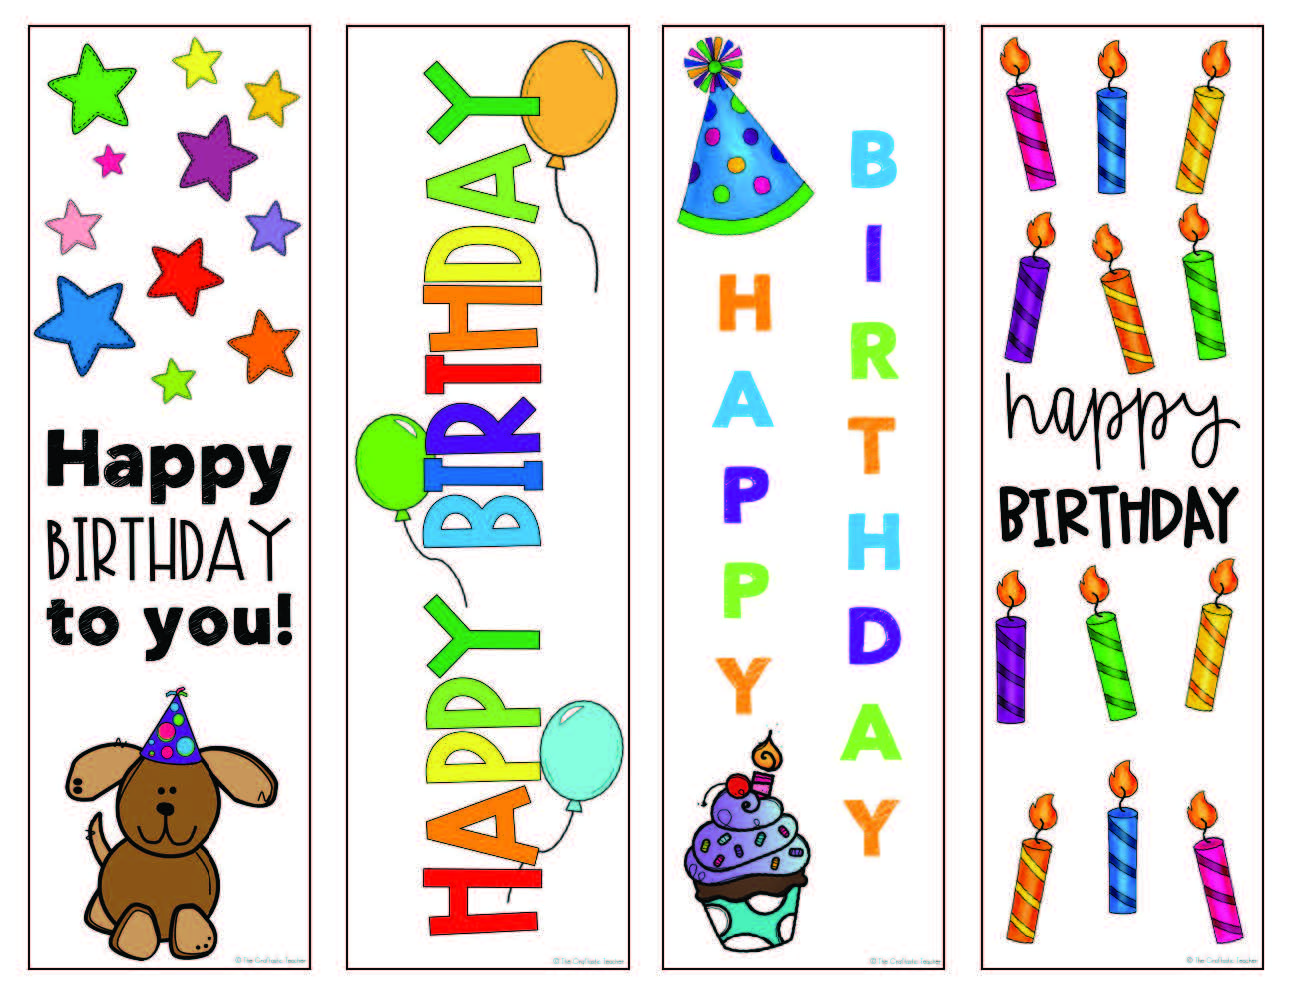 happy-birthday-bookmarks-1201misc-cr-creative-services-e-store